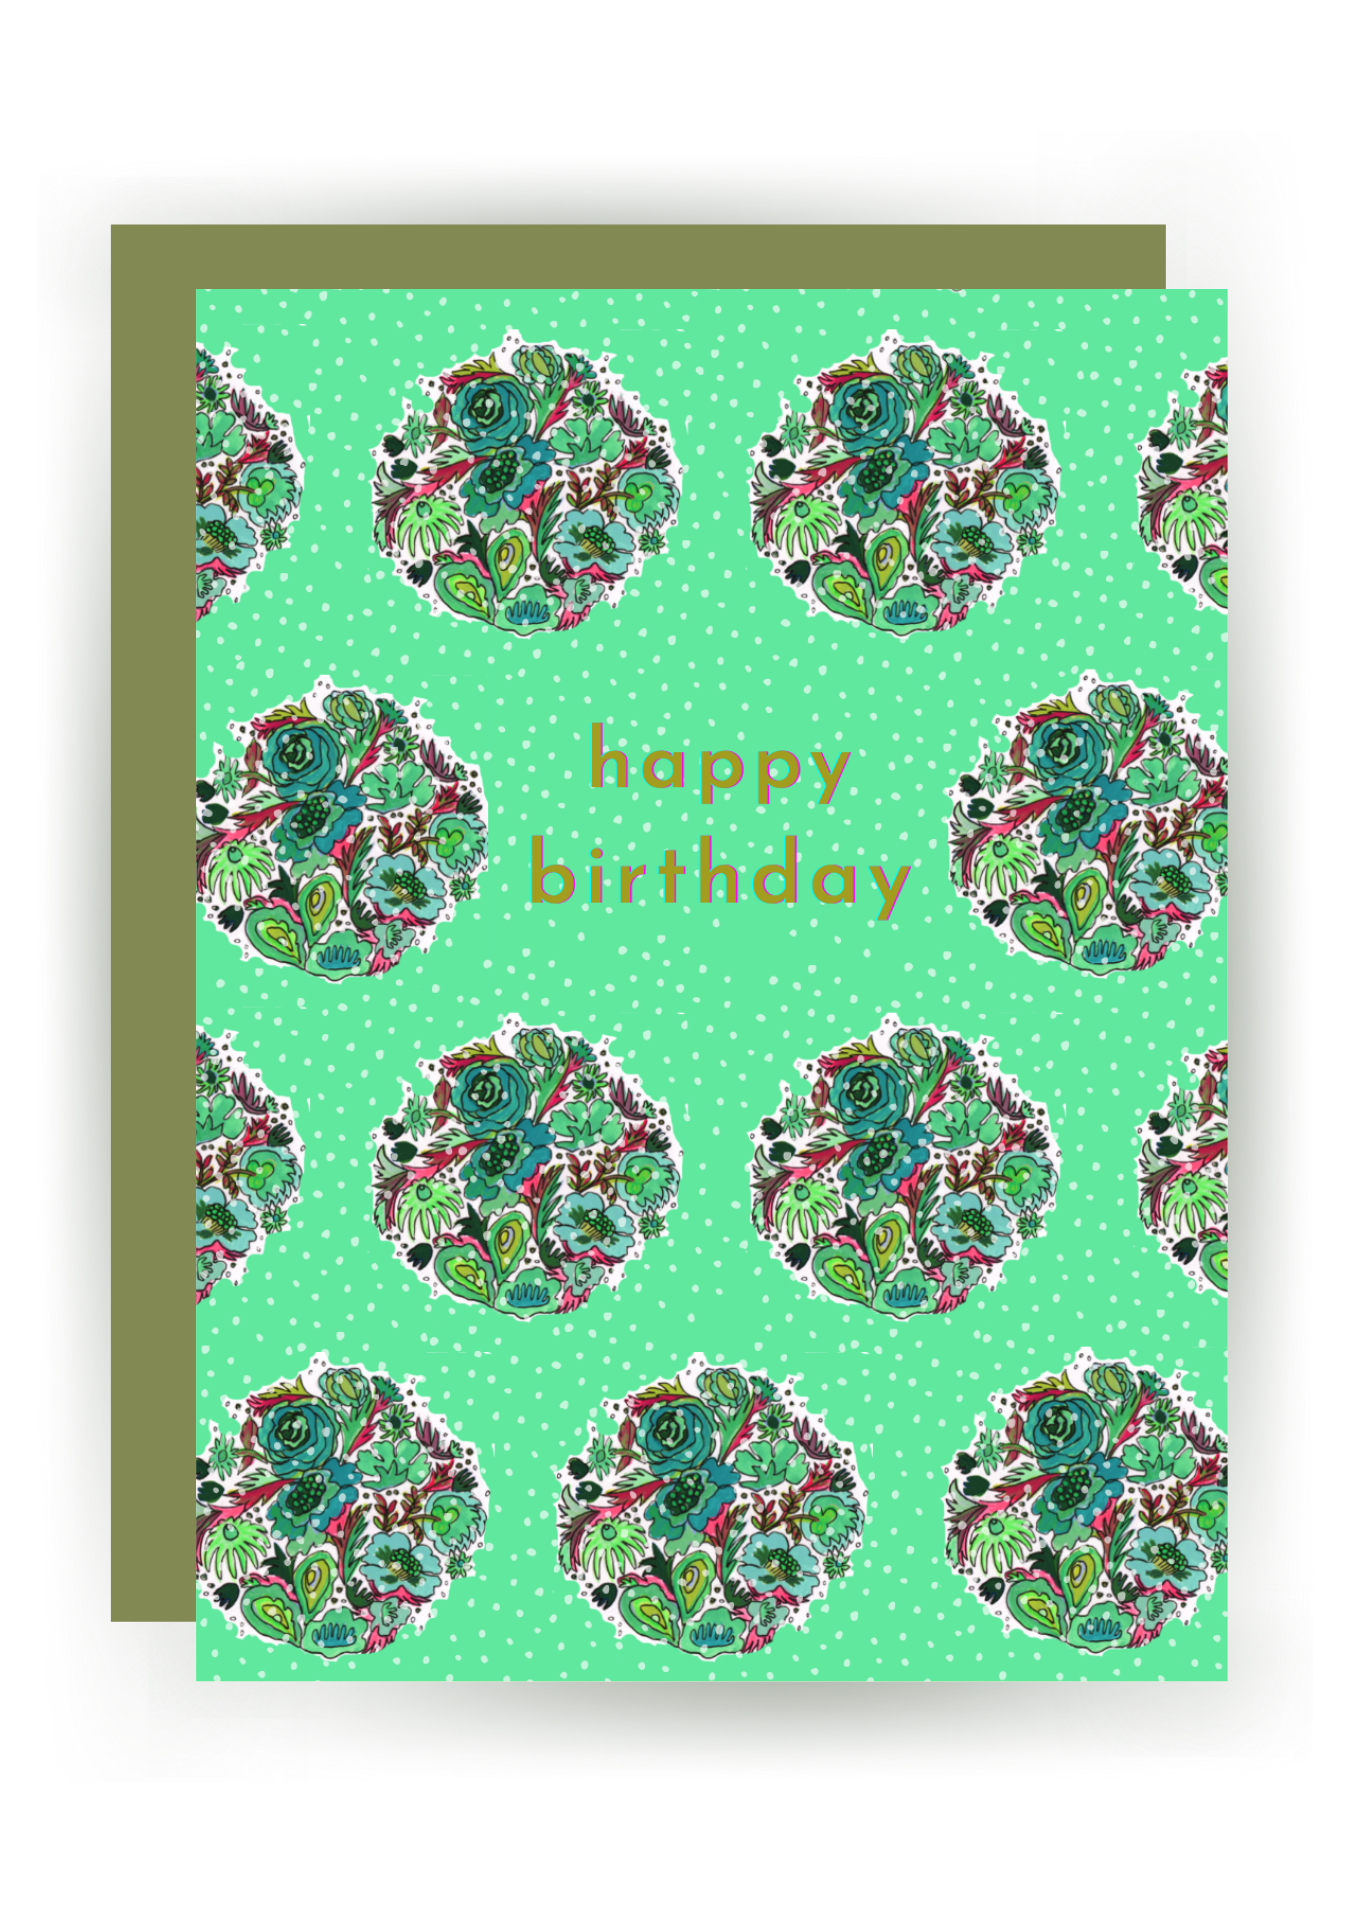 NF OC 30 /  'Happy Birthday' Greeting Card